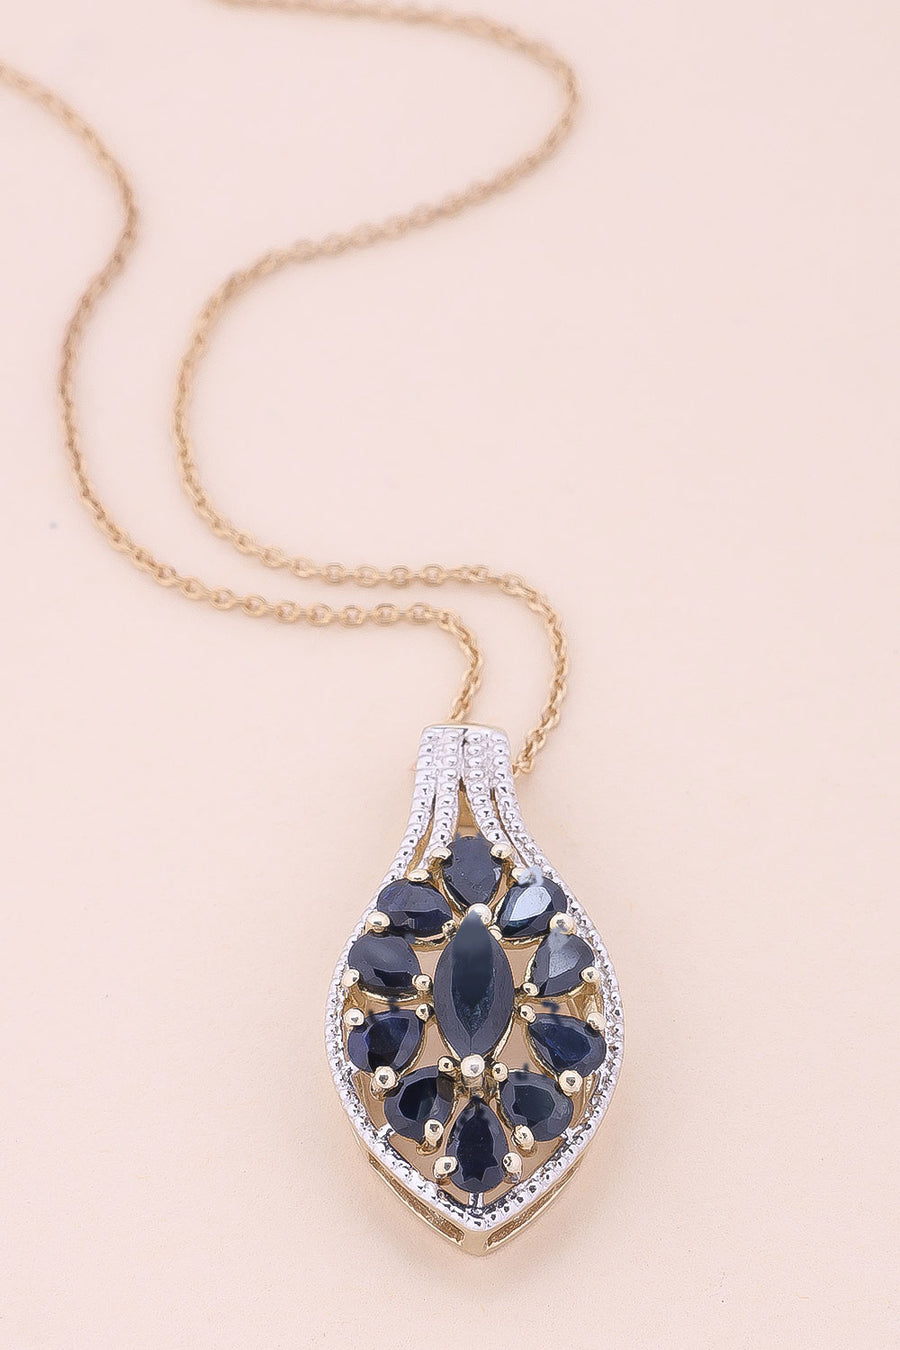 Blue Sapphire Silver Necklace Pendant Chain 10067178 - Avishya